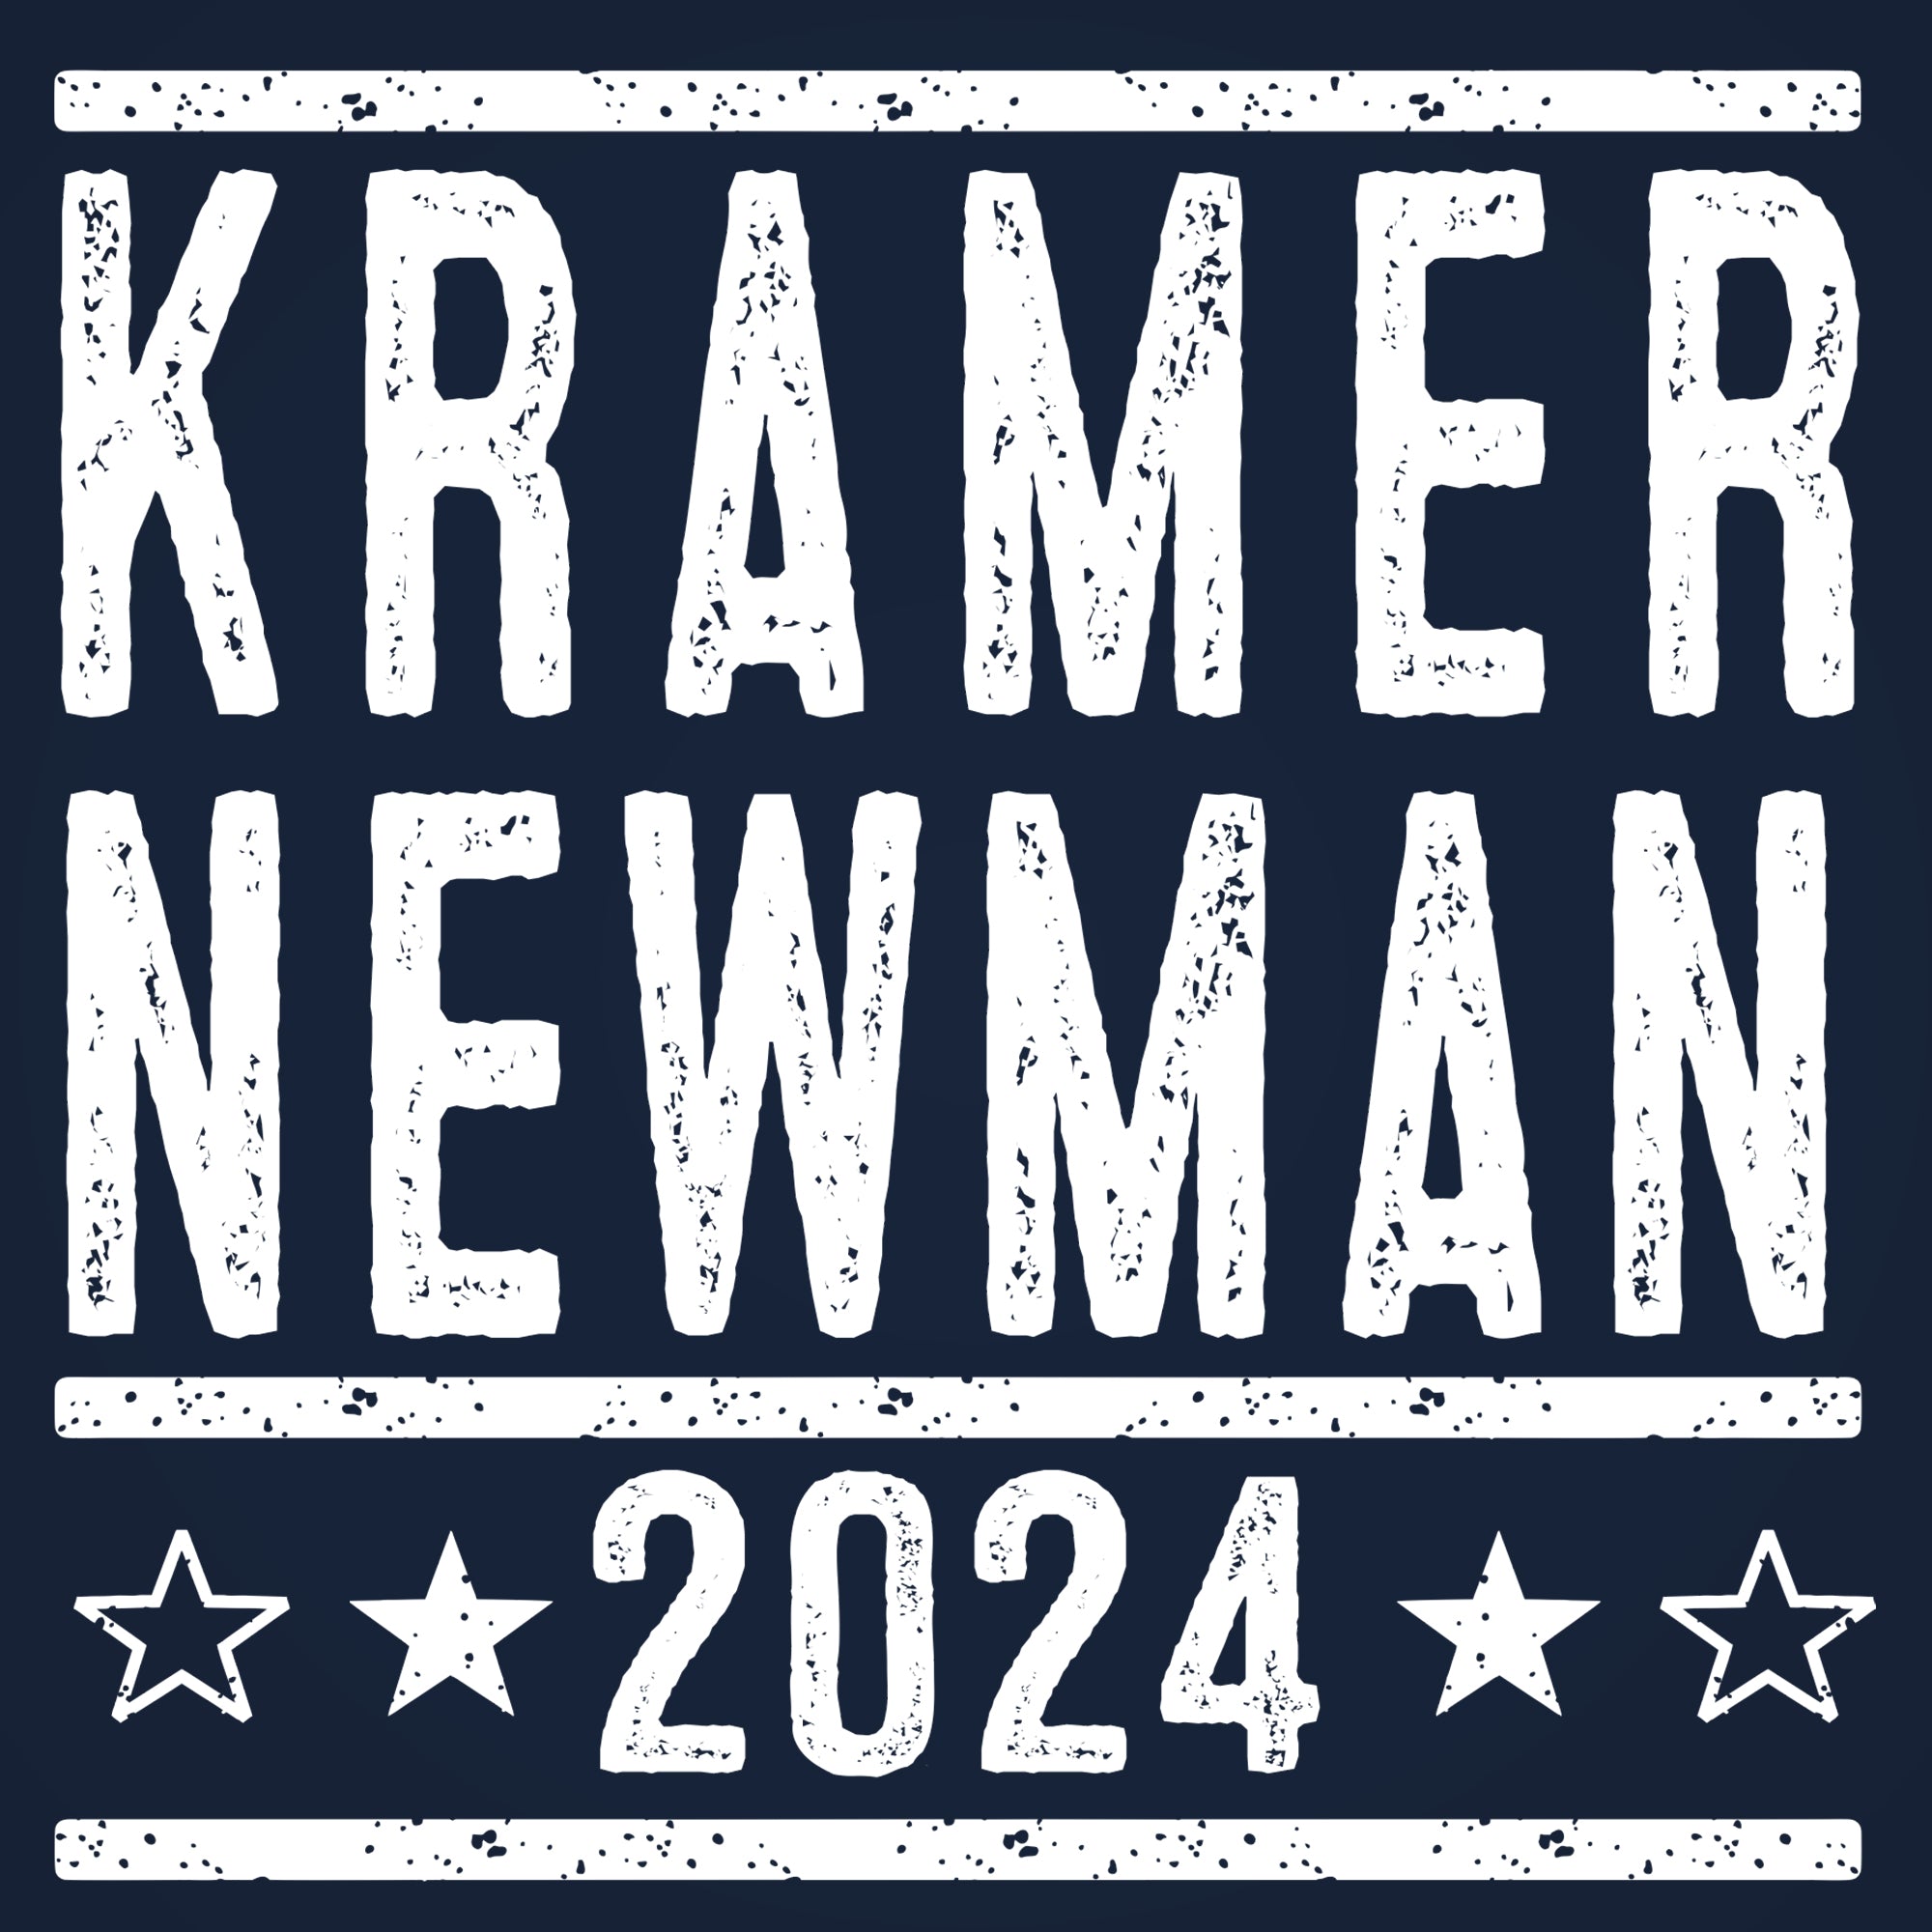 Kramer and Newman 2024 Election Tshirt - Donkey Tees